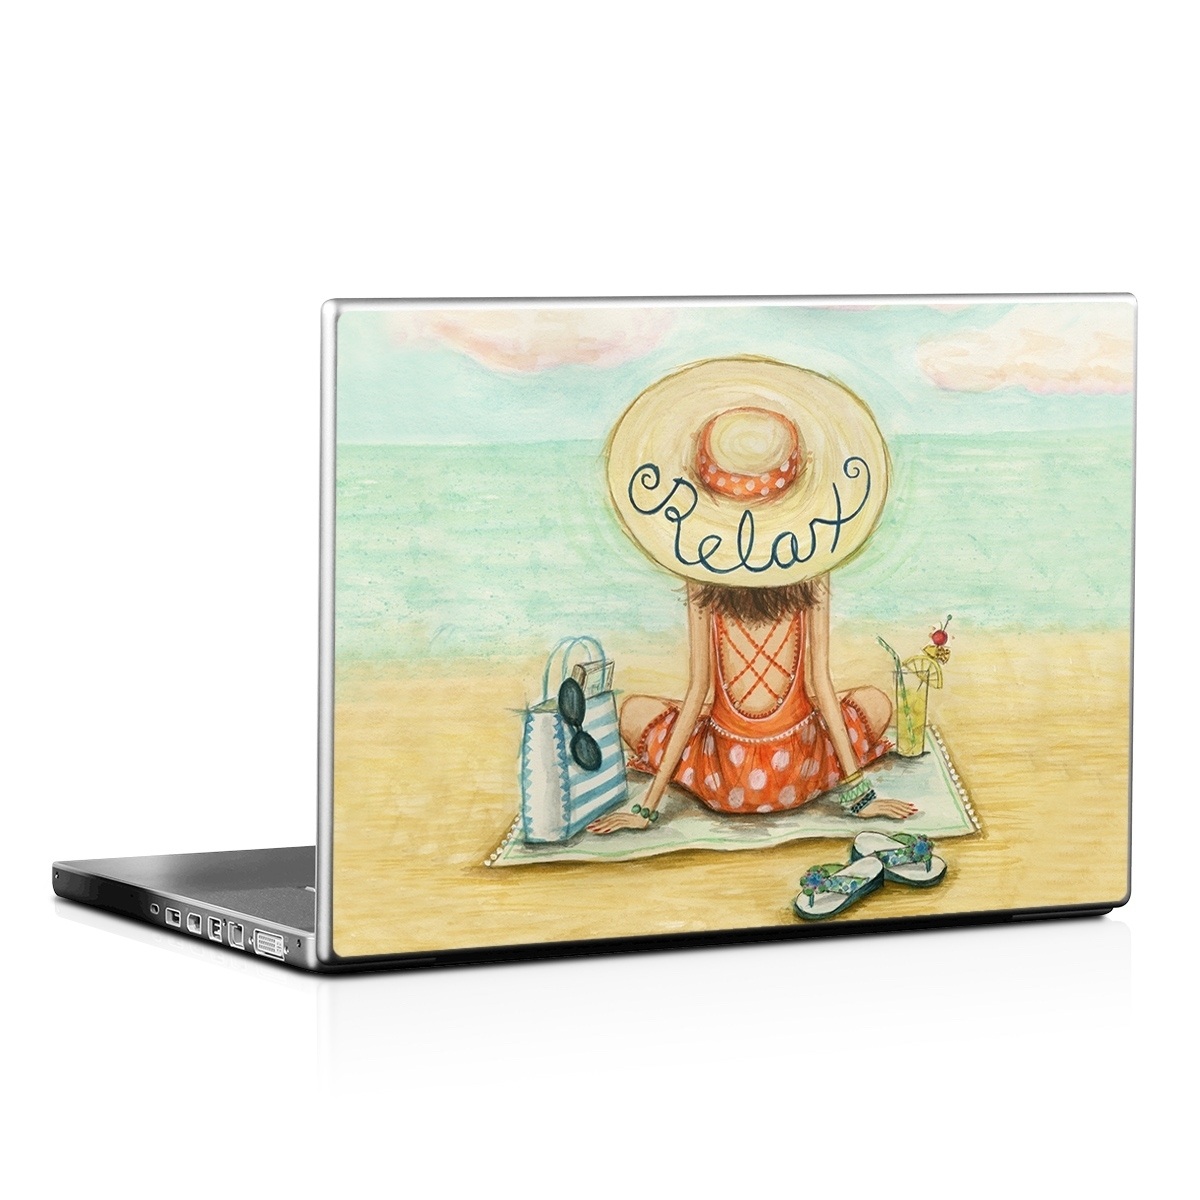 Laptop Skin - Relaxing on Beach (Image 1)